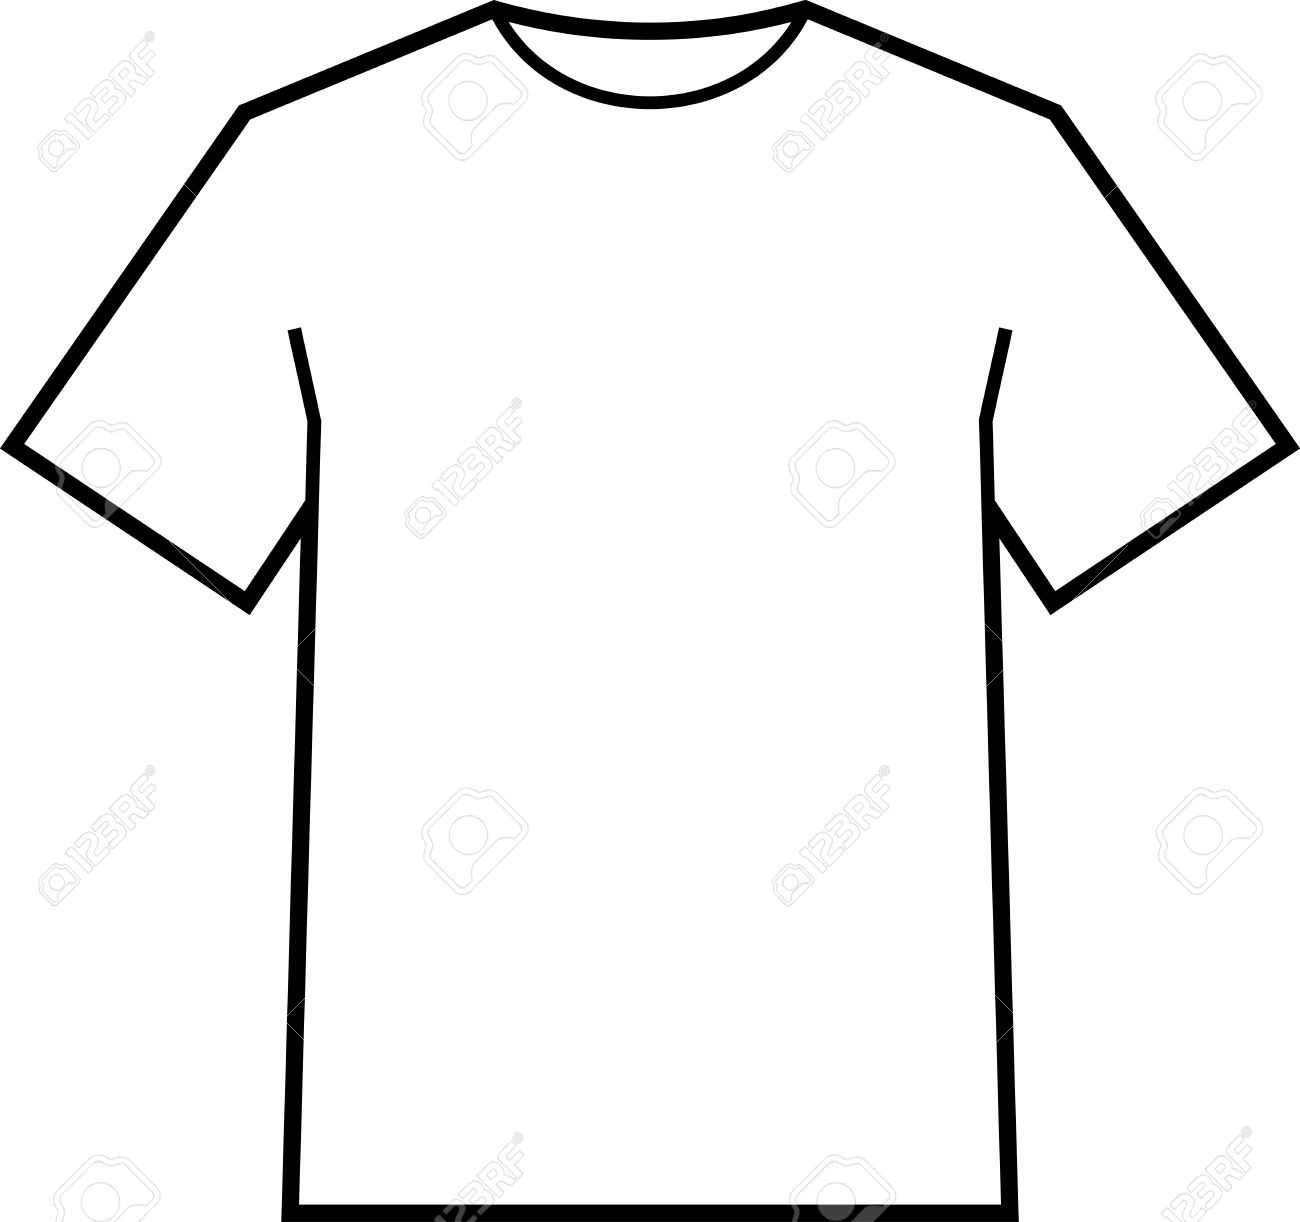 Blank Shirt Template Pertaining To Blank Tshirt Template Printable